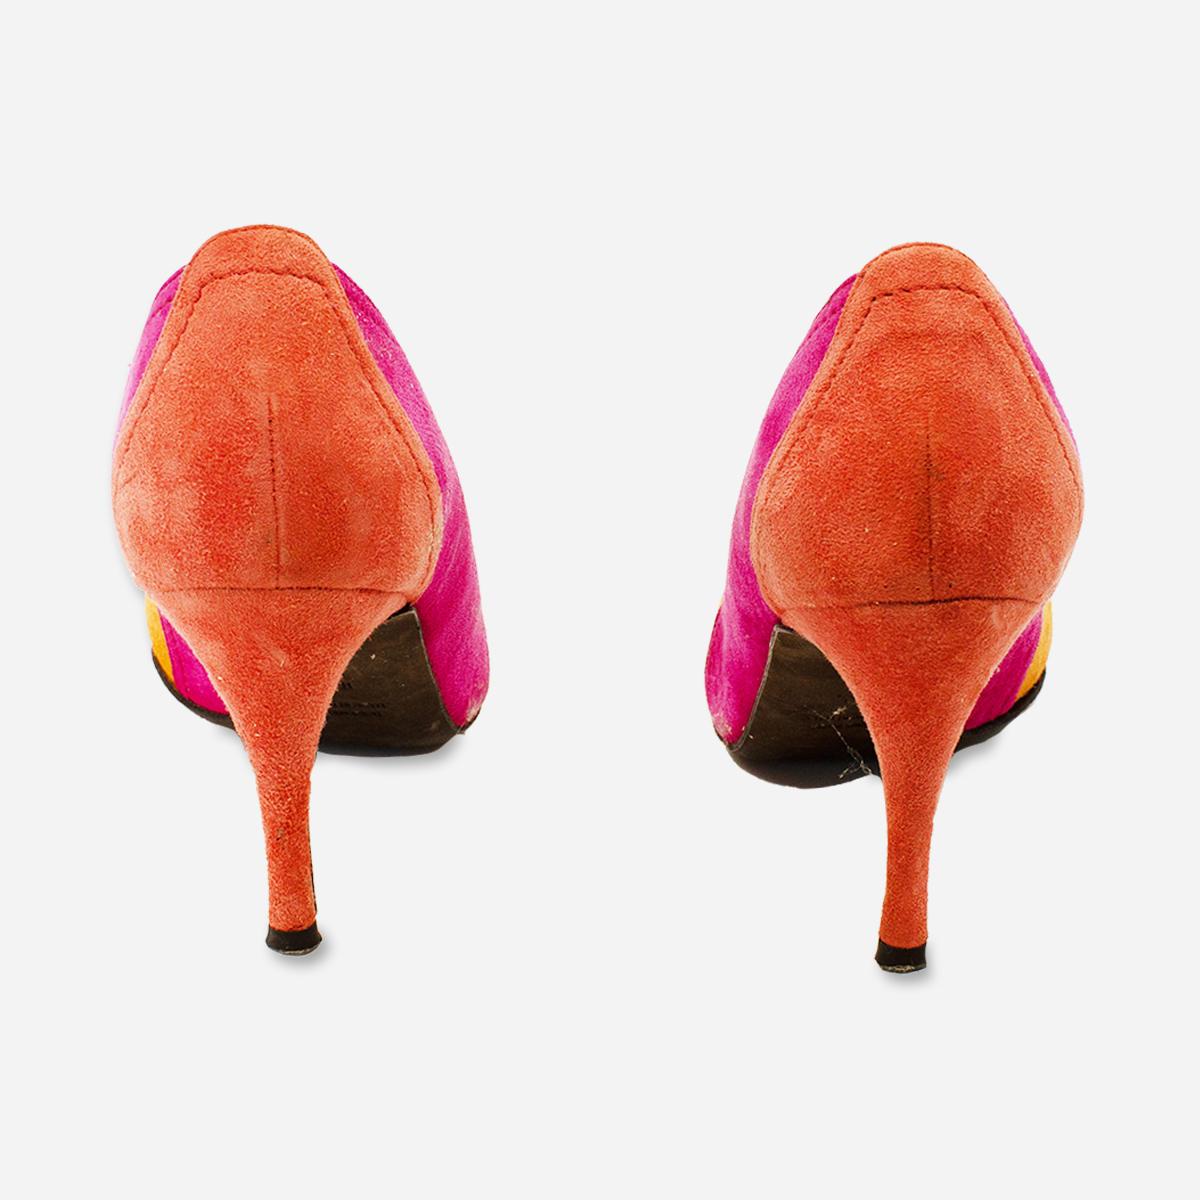 High heel pumps in orange and pink suede